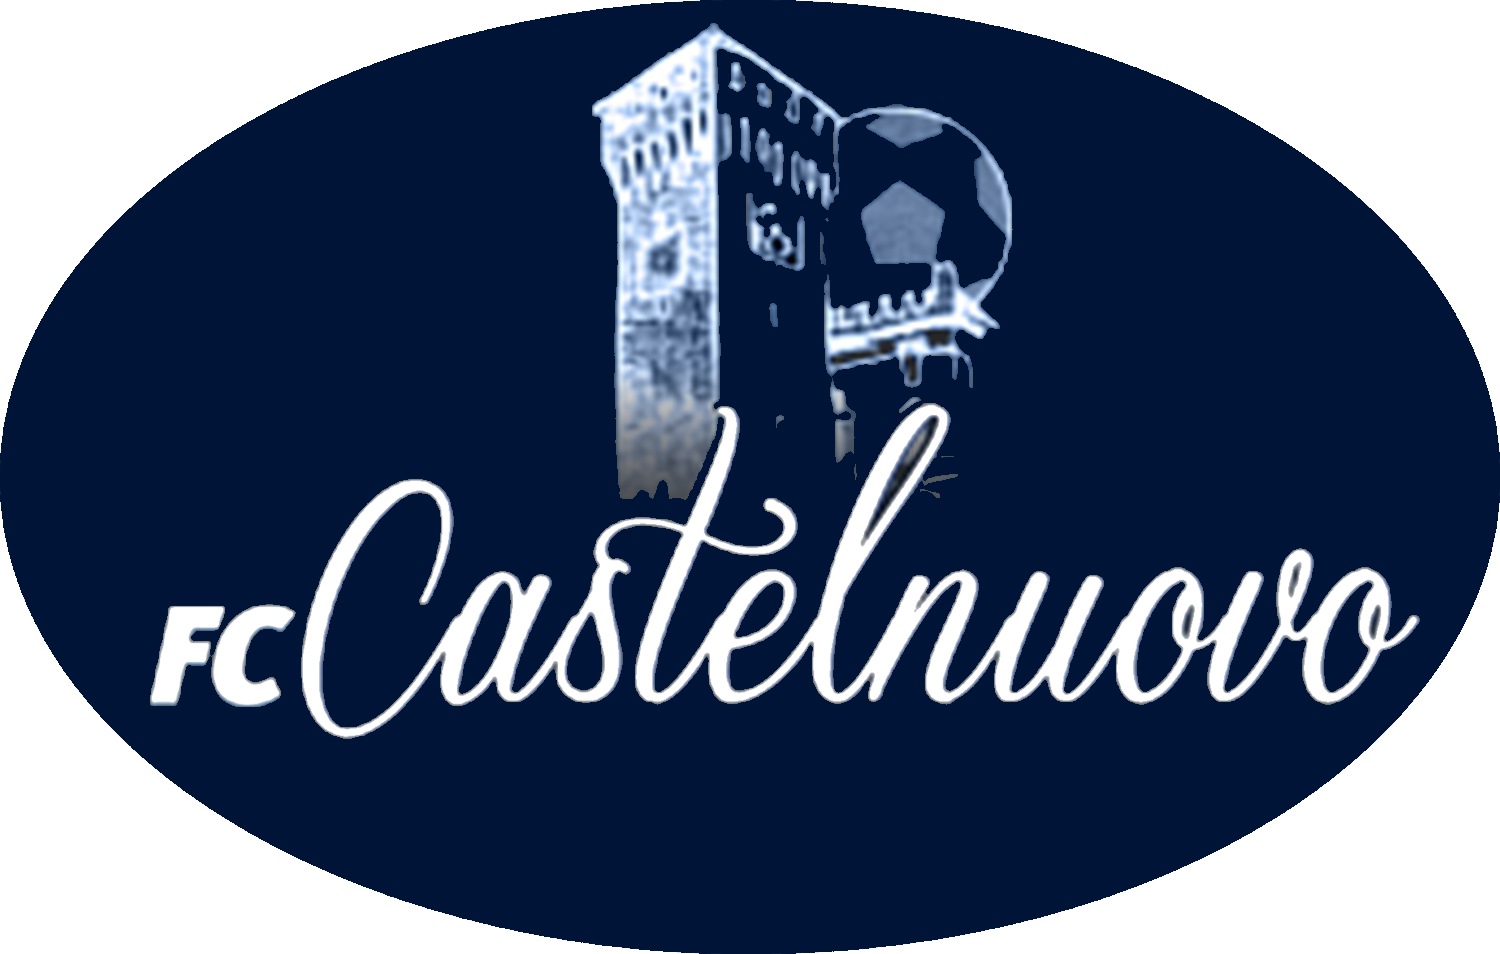 FC CASTELNUOVO v YOUNG BOYS COGNENTESE